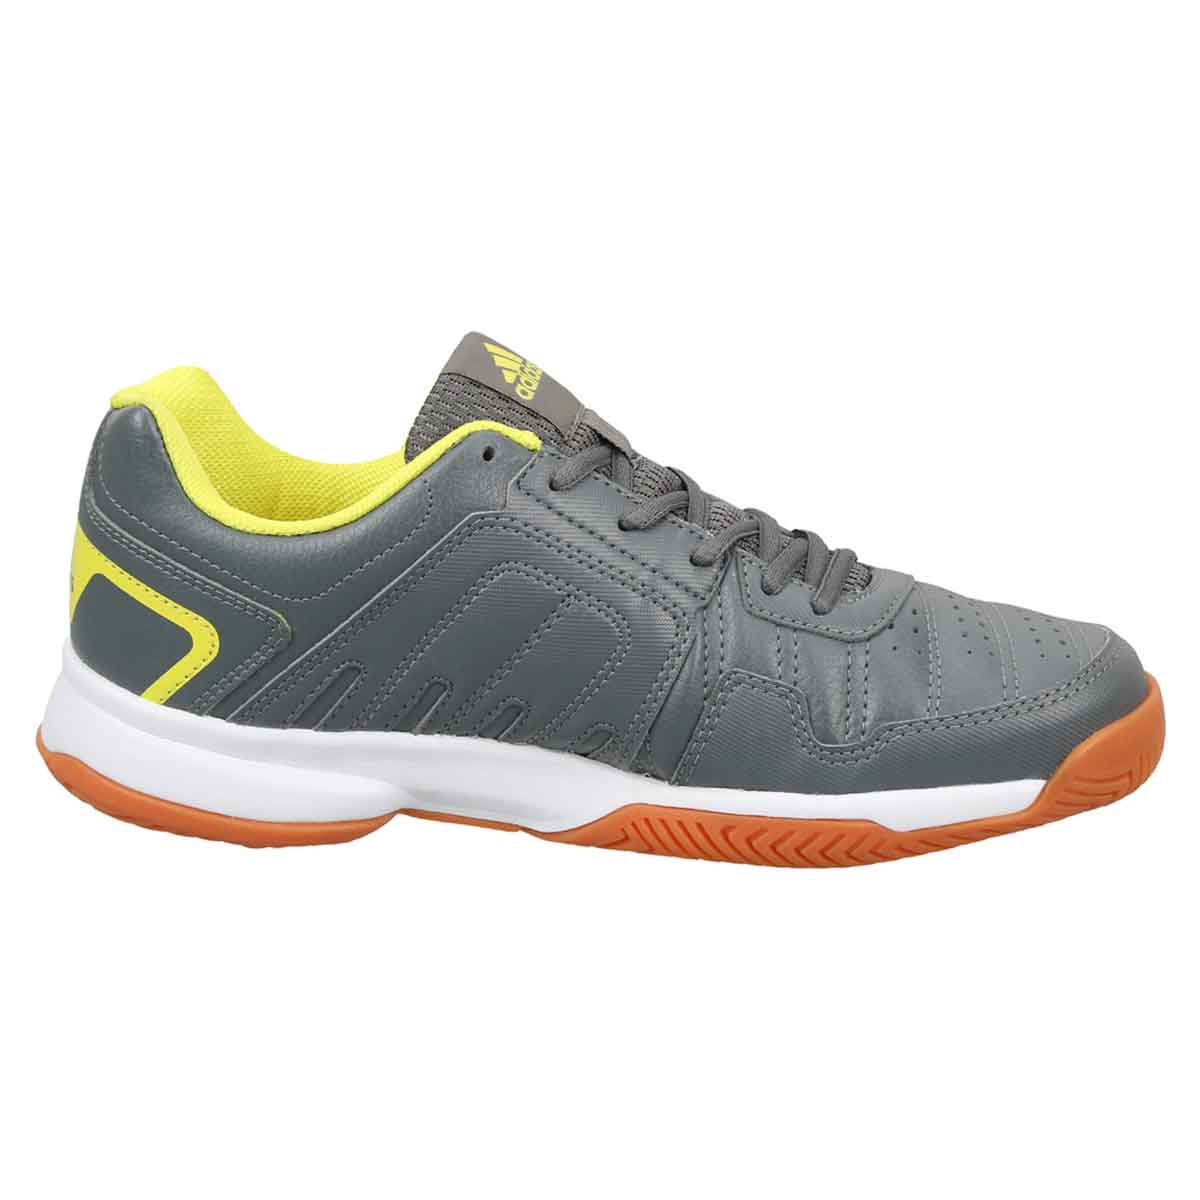 Buy Adidas Baseliner 2 Indoor Court Shoes Online in India